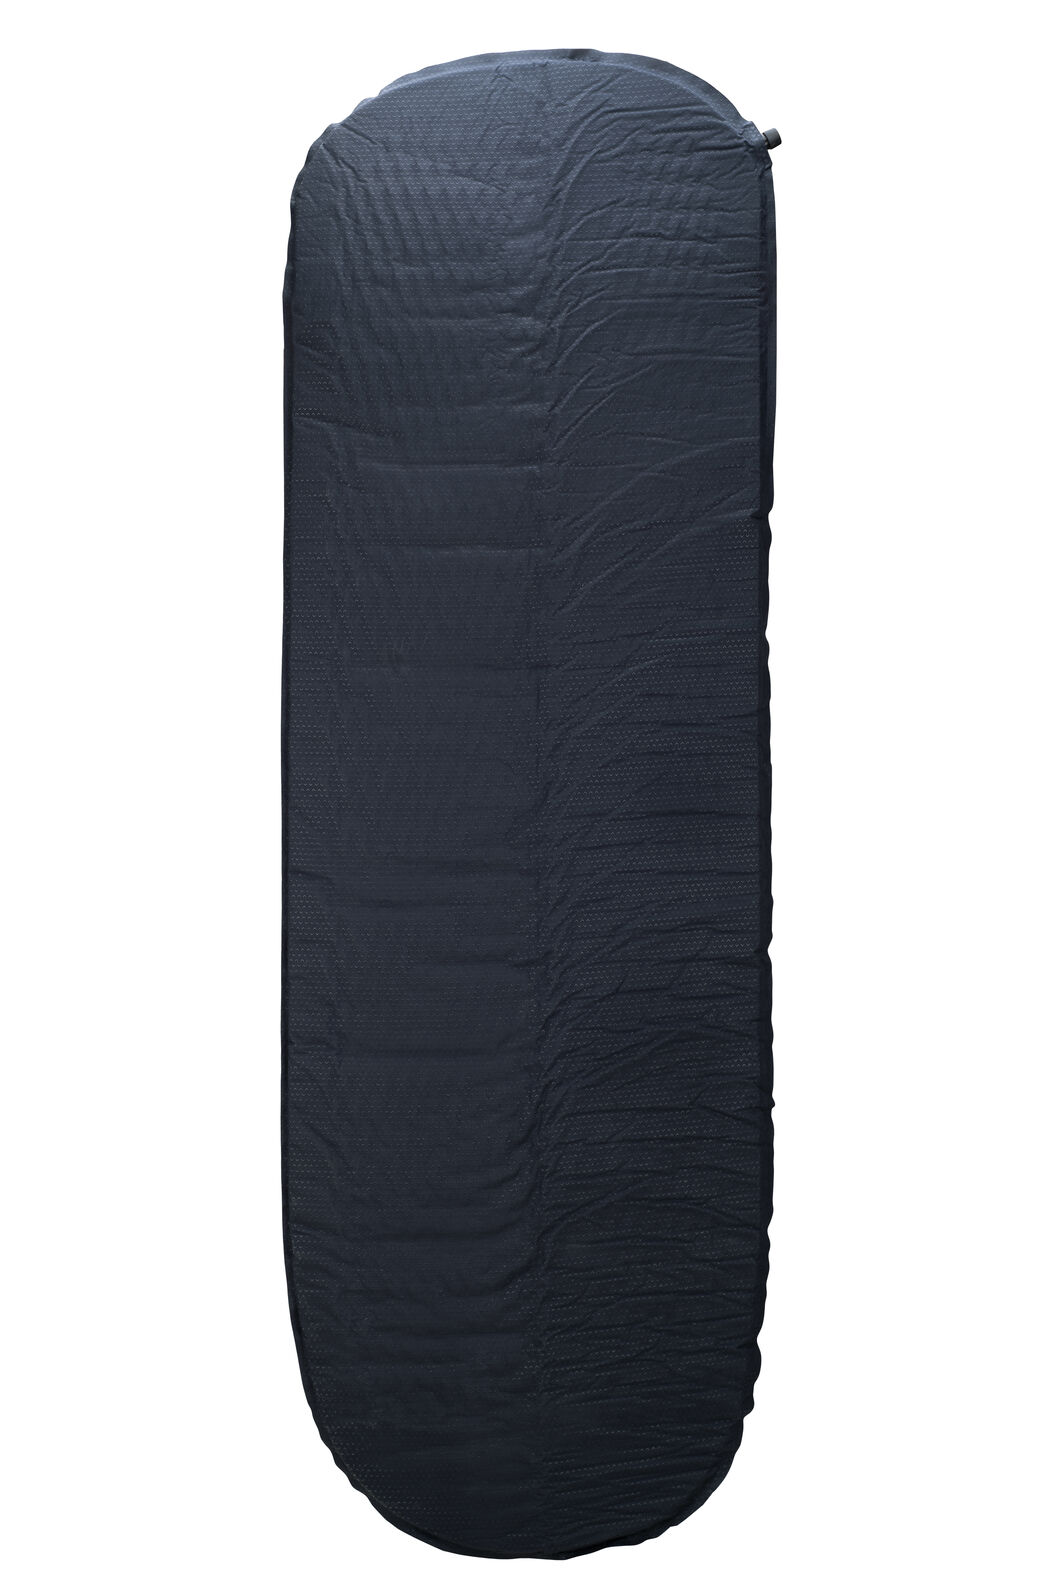 Macpac Self-Inflating Sleeping Mat — 5 cm | Macpac